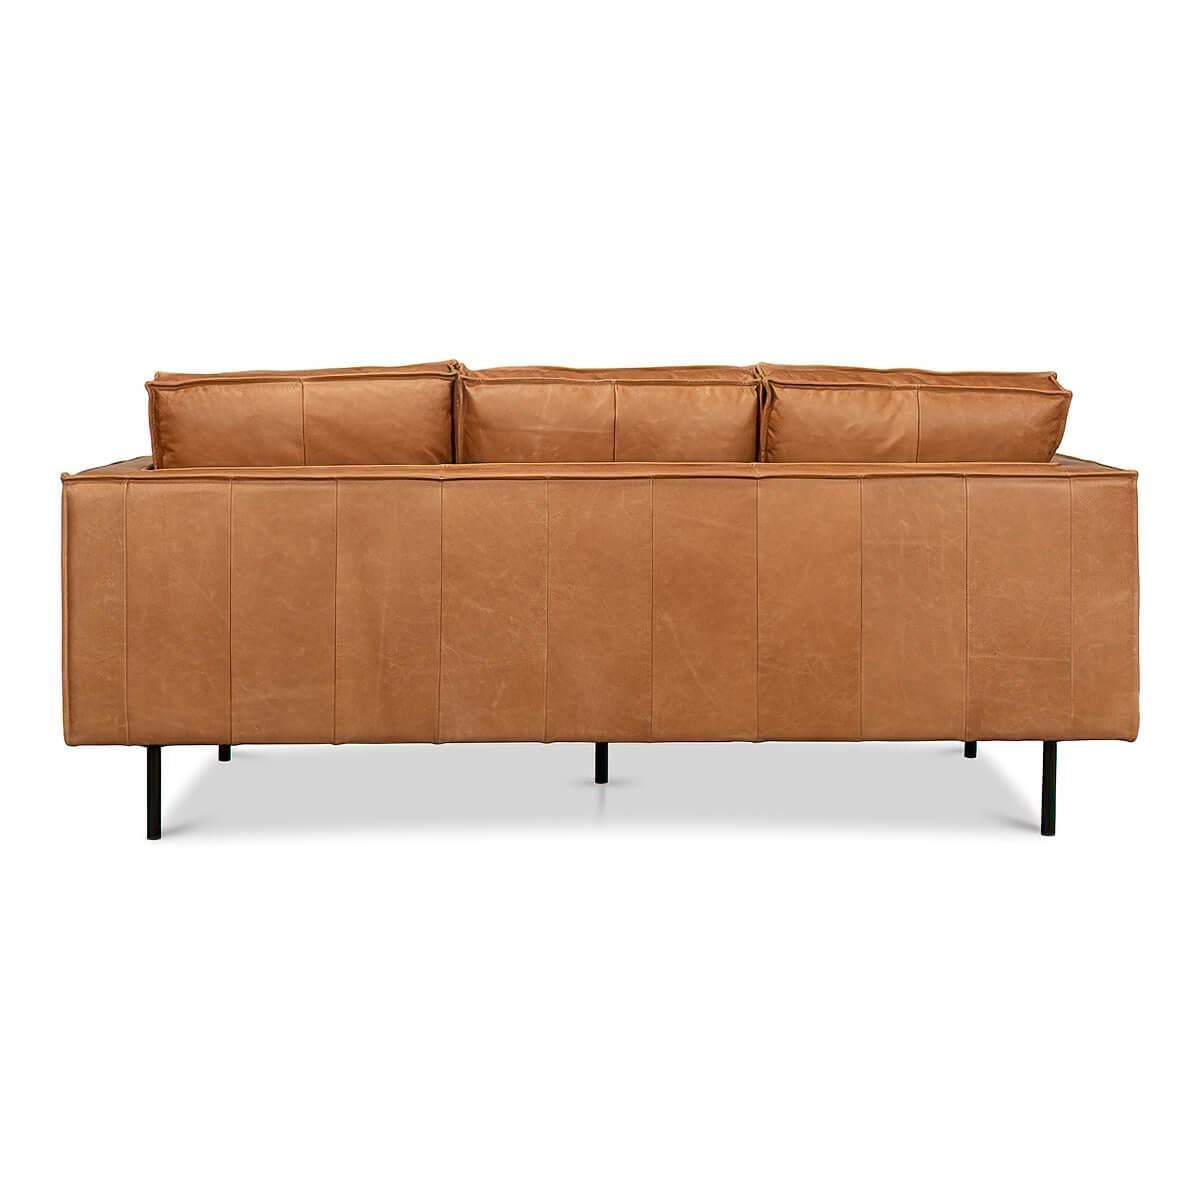 Mid-Century Modern Modern Leather Sofa For Sale